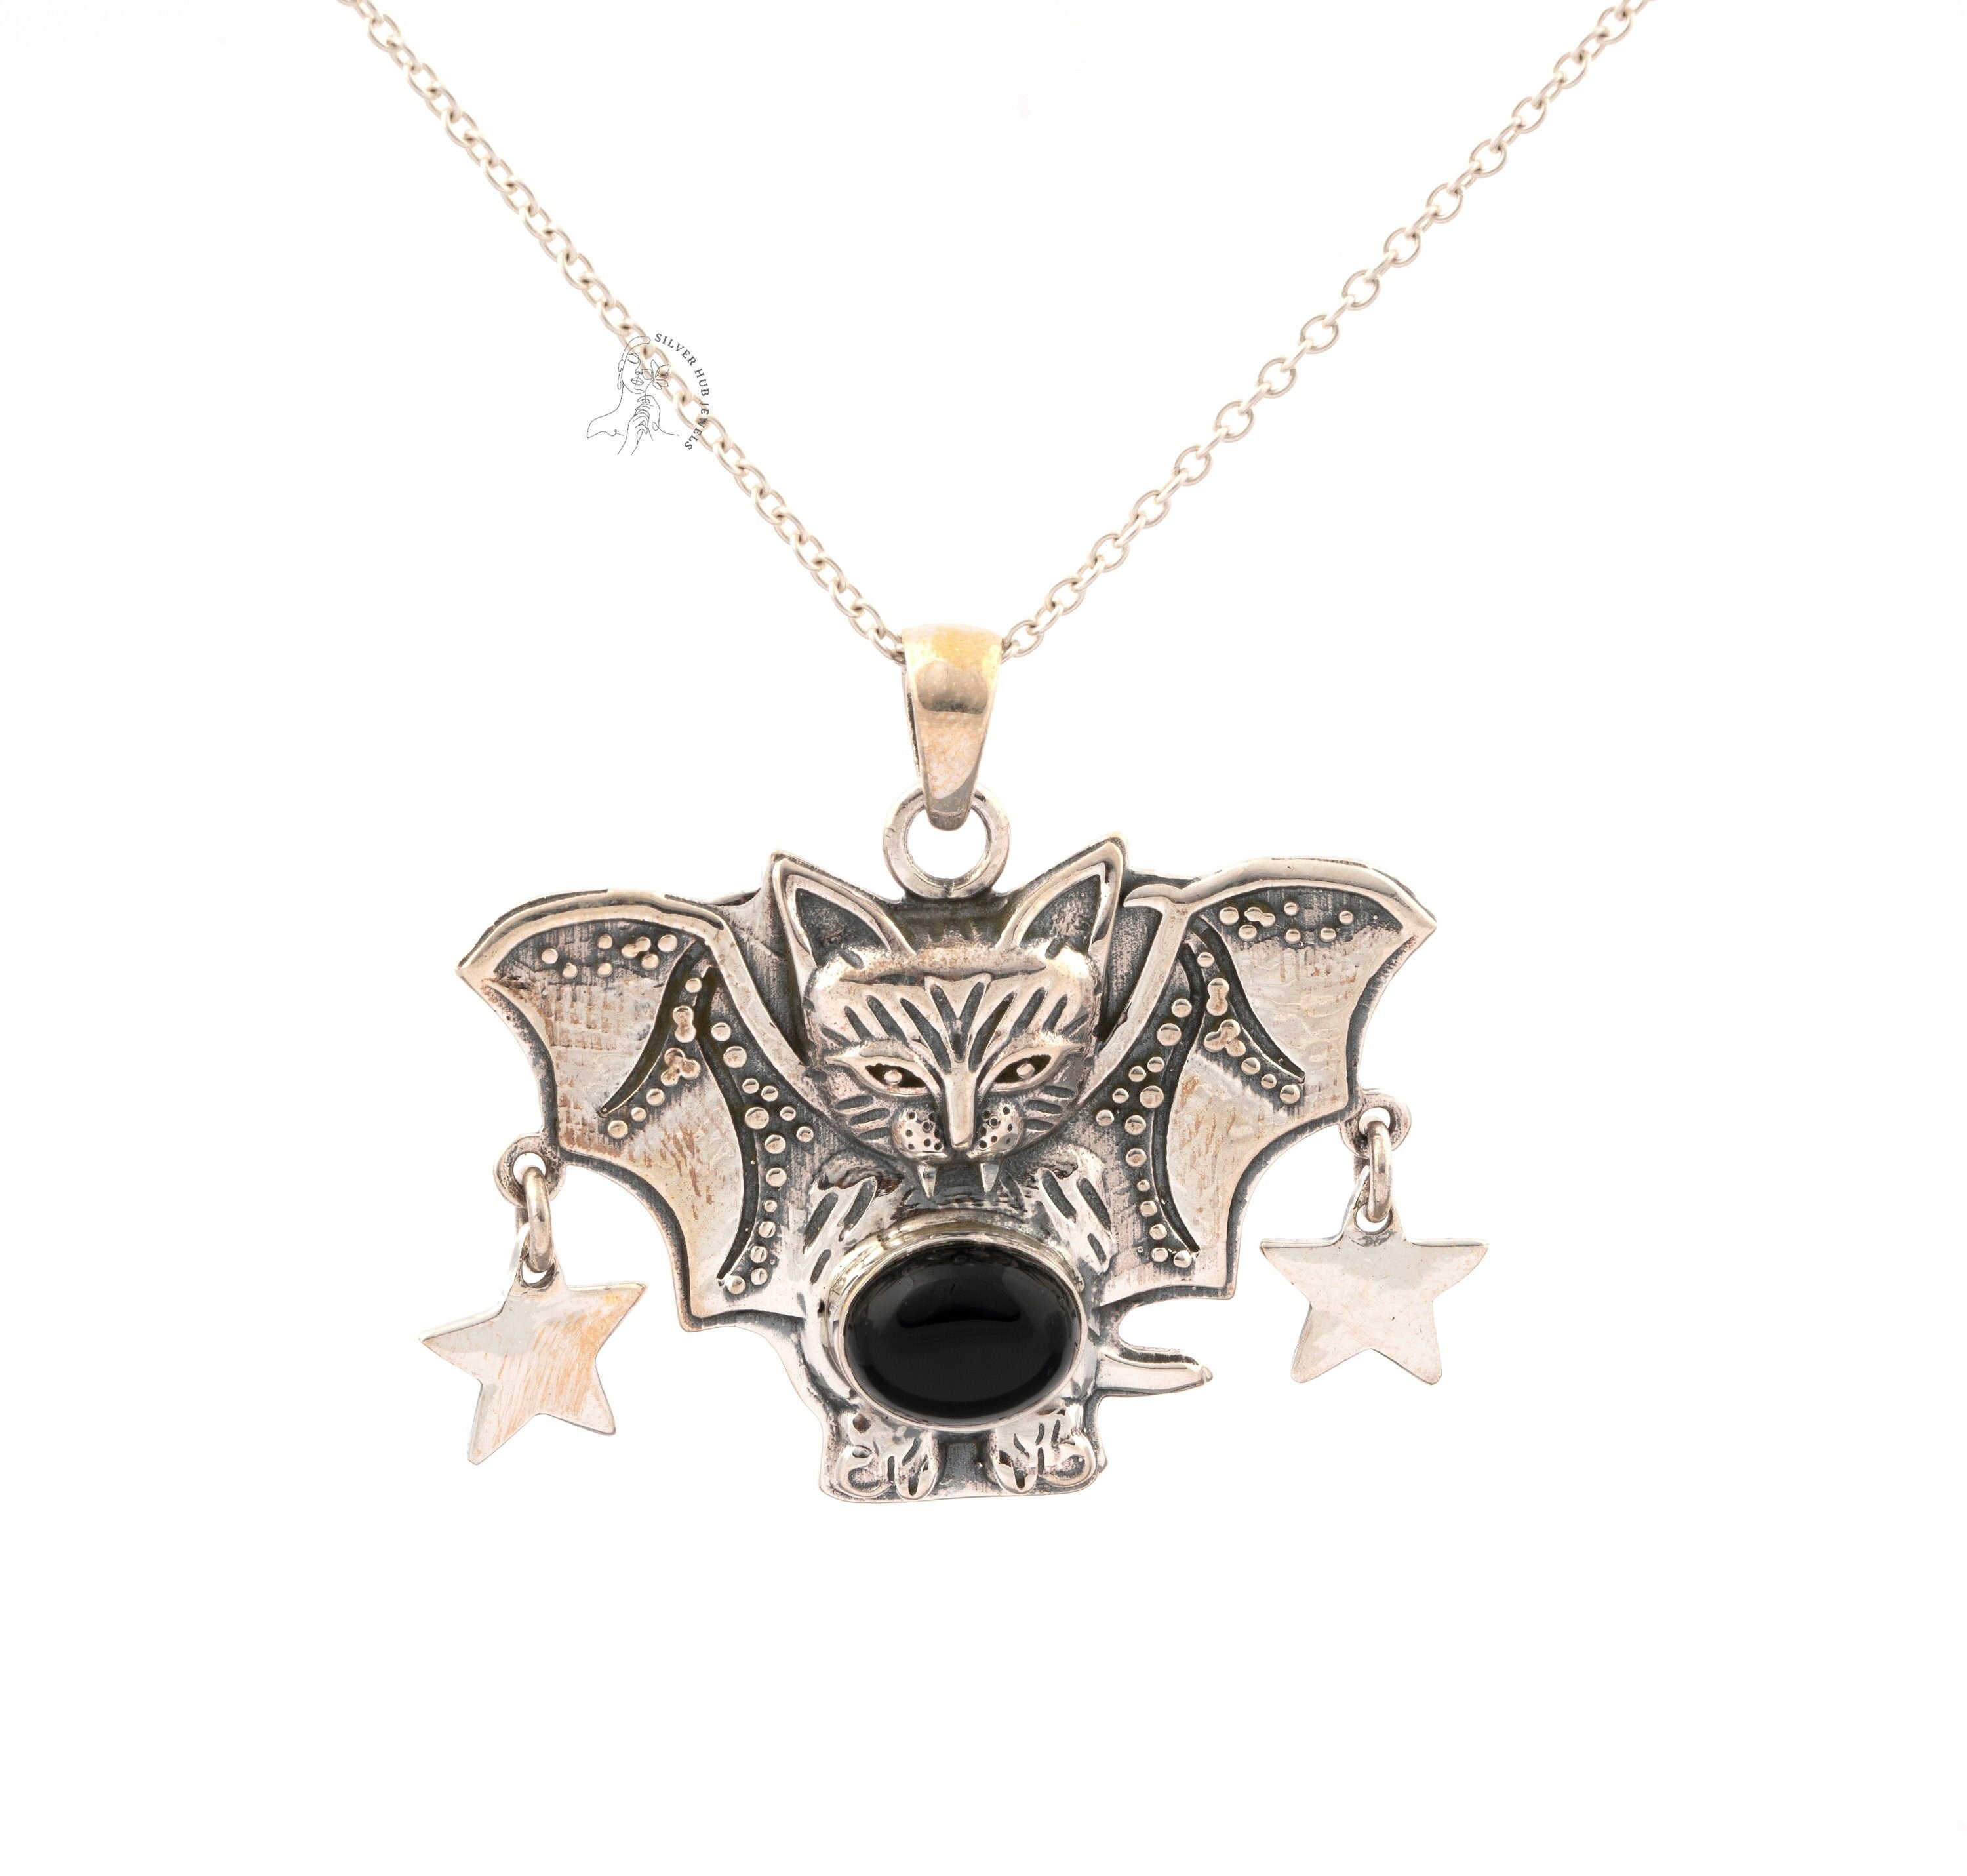 Precious Black Onyx Pendant, Gemstone Pendant, Black Pendant, 925 Sterling Silver Jewelry, Engagement Gift, Pendant For Sister